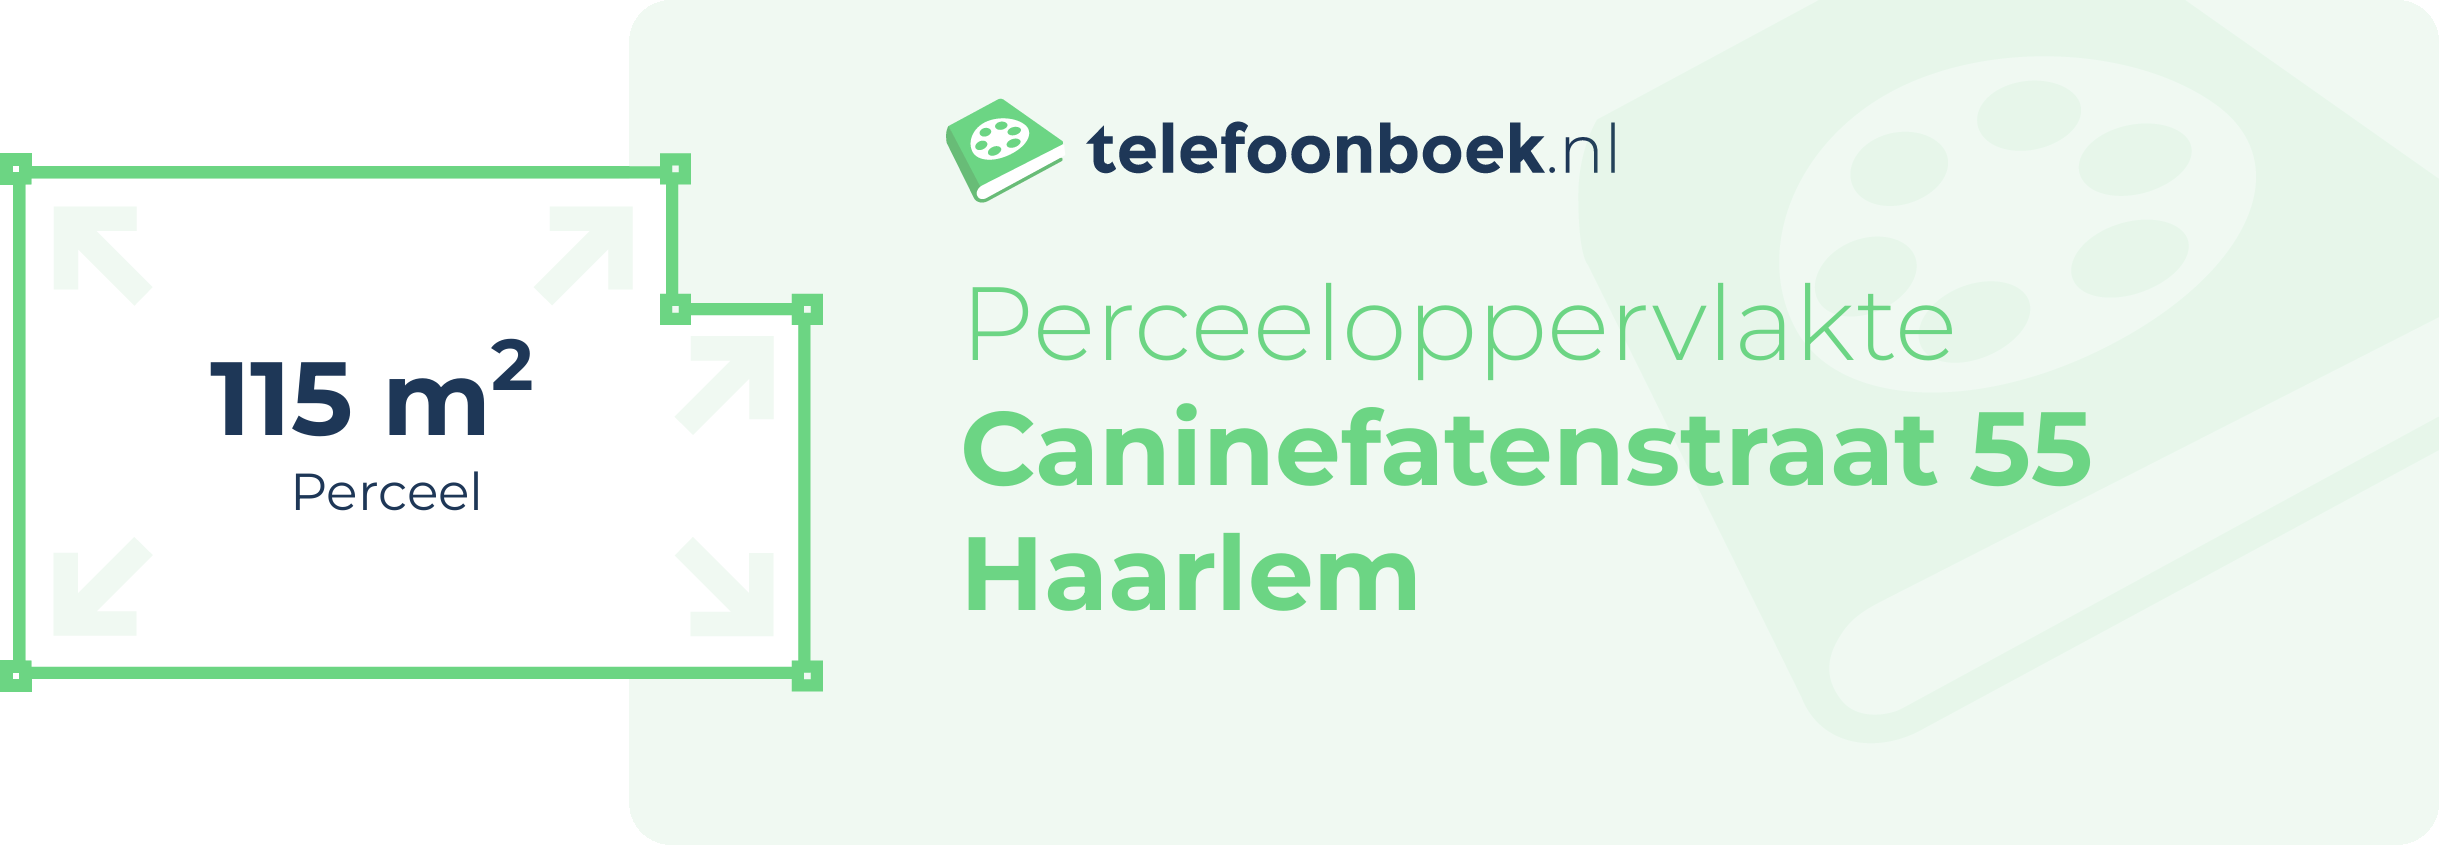 Perceeloppervlakte Caninefatenstraat 55 Haarlem